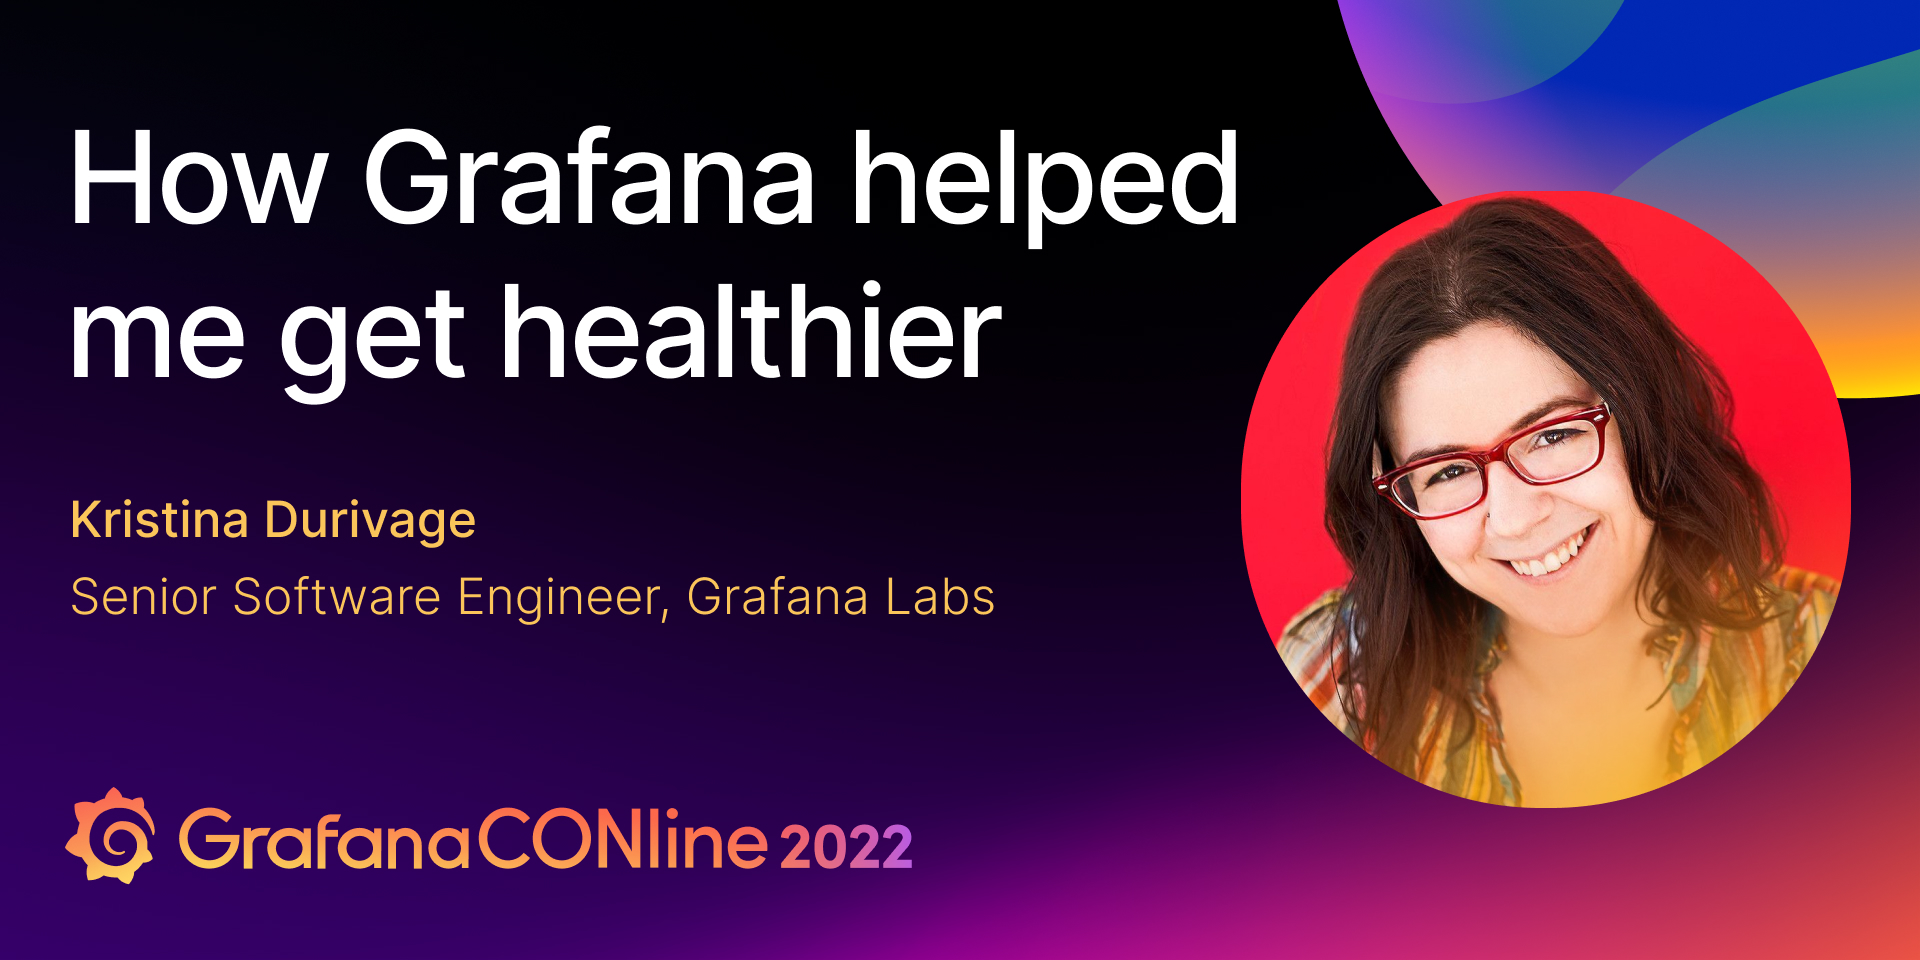 How Grafana helped me get healthier session at GrafanaCONline 2022